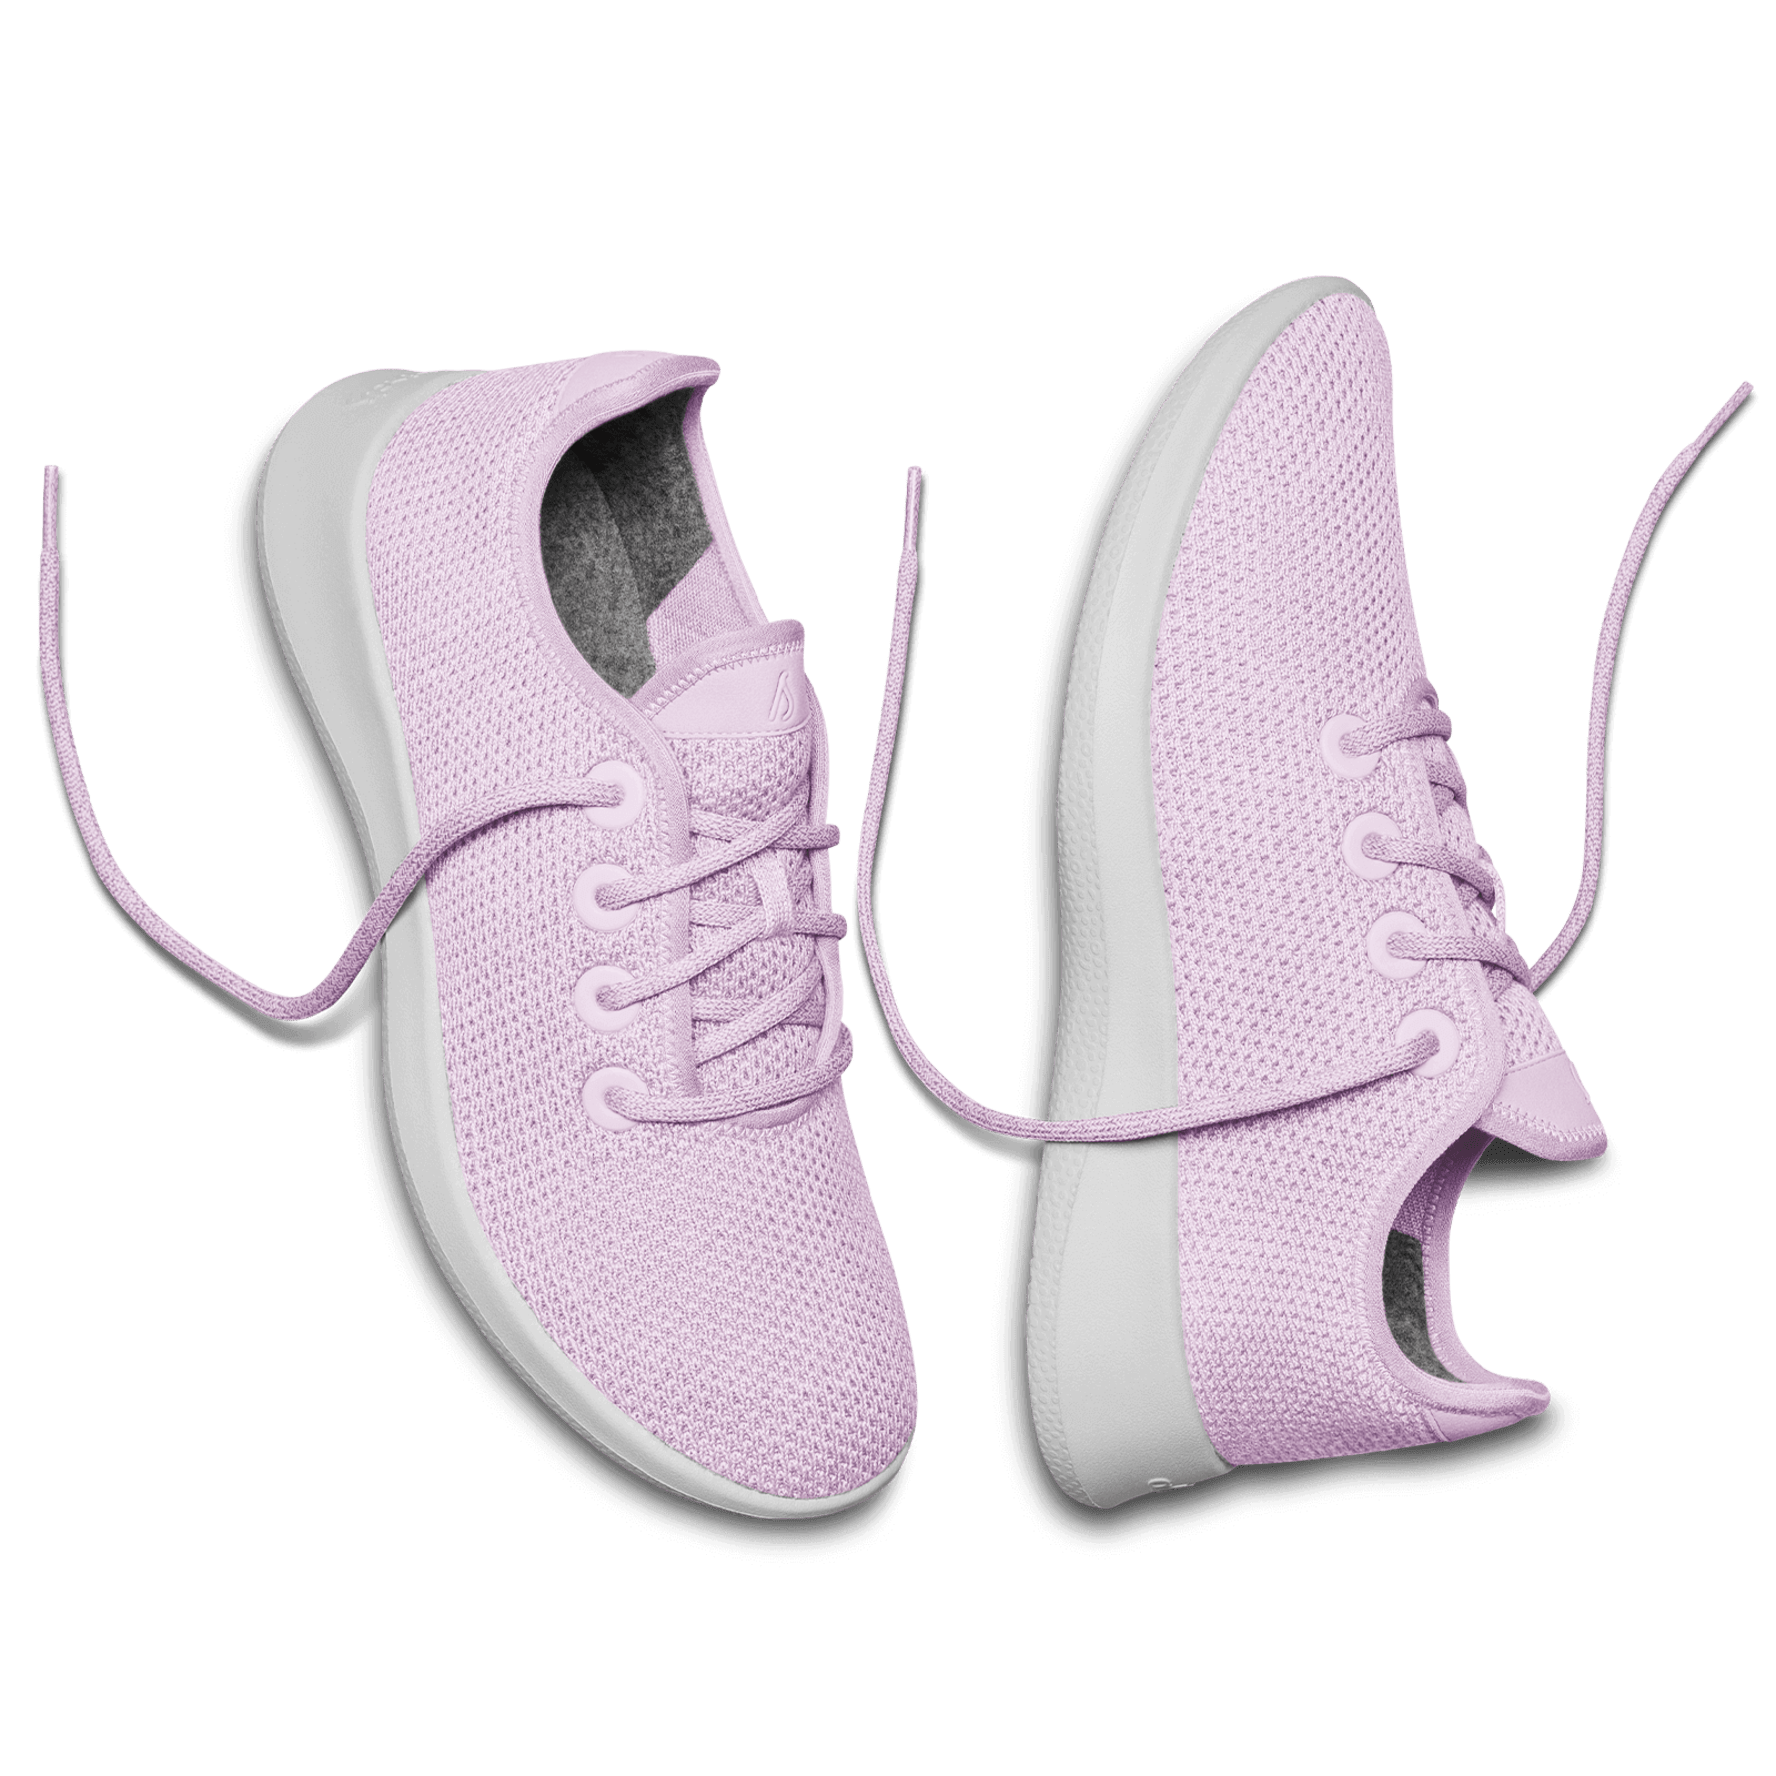 Allbirds Wool Runners Low Top Lace Up Pastel Lilac - Depop